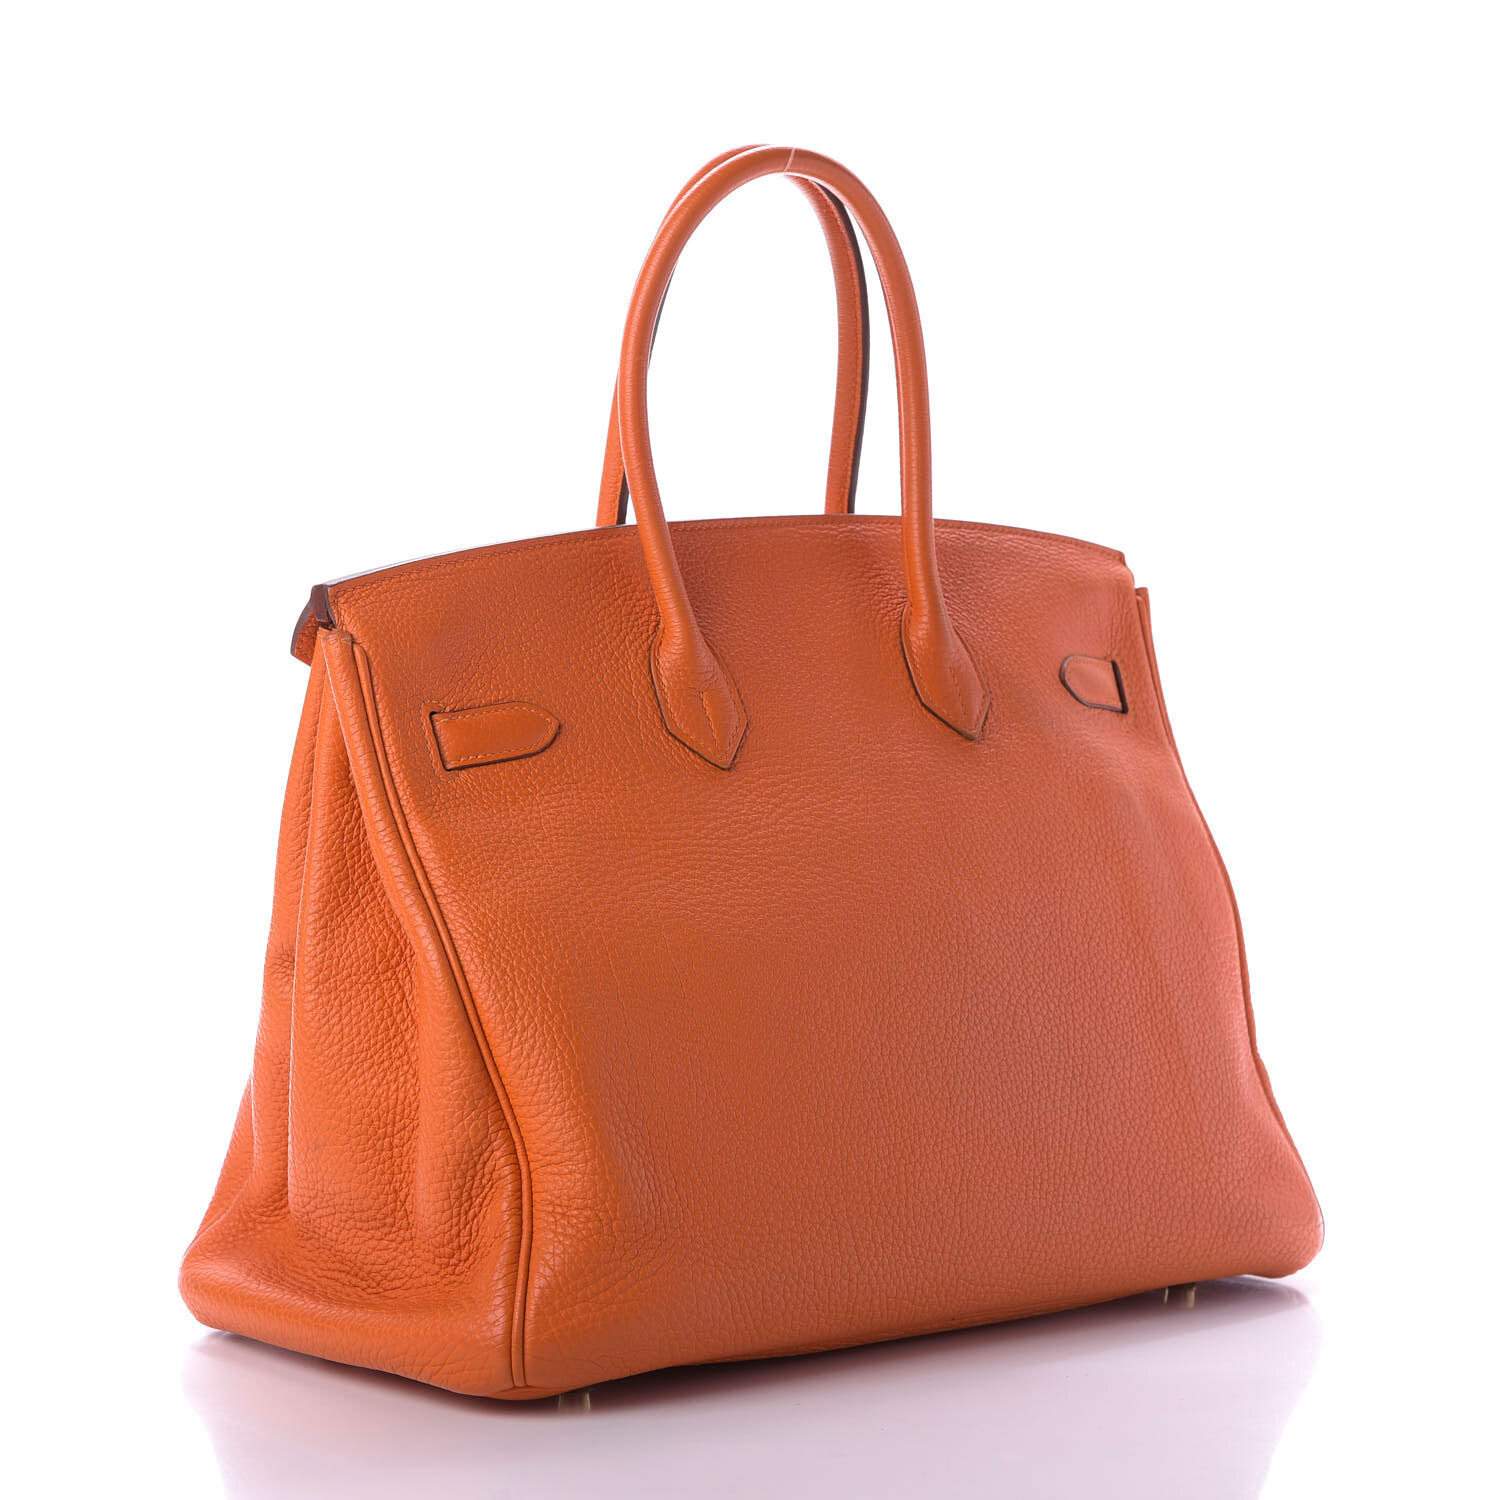 hermes-togo-birkin-35-orange-available-for-sale-collecting-luxury-2.jpg